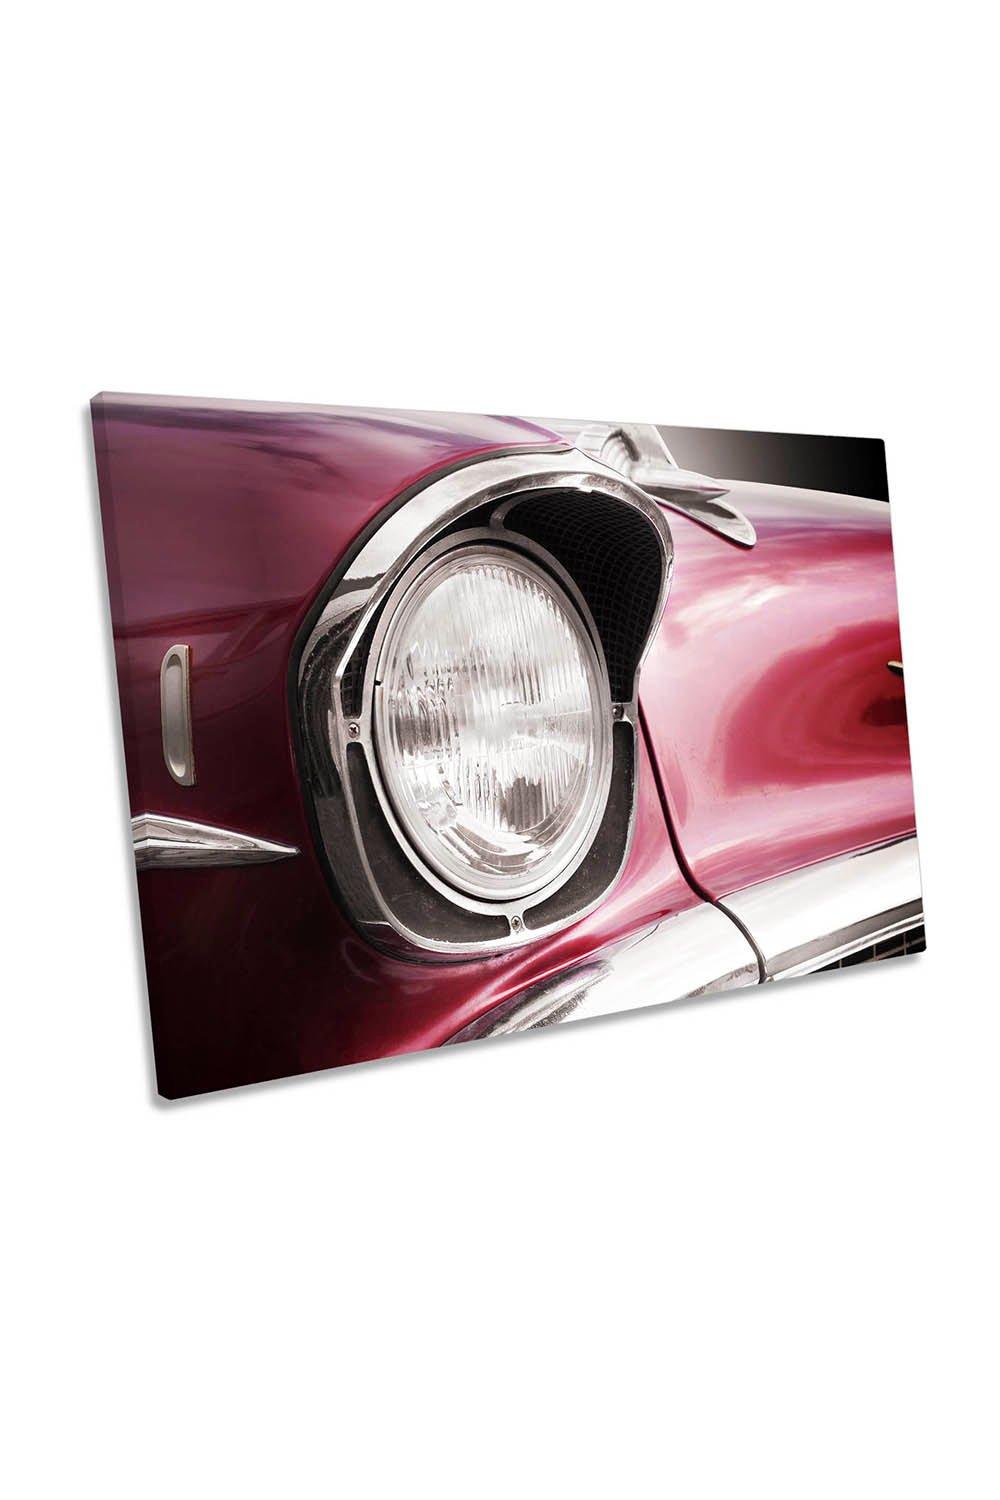 American Classic Car Bel Air 1957 Headlight Canvas Wall Art Picture Print